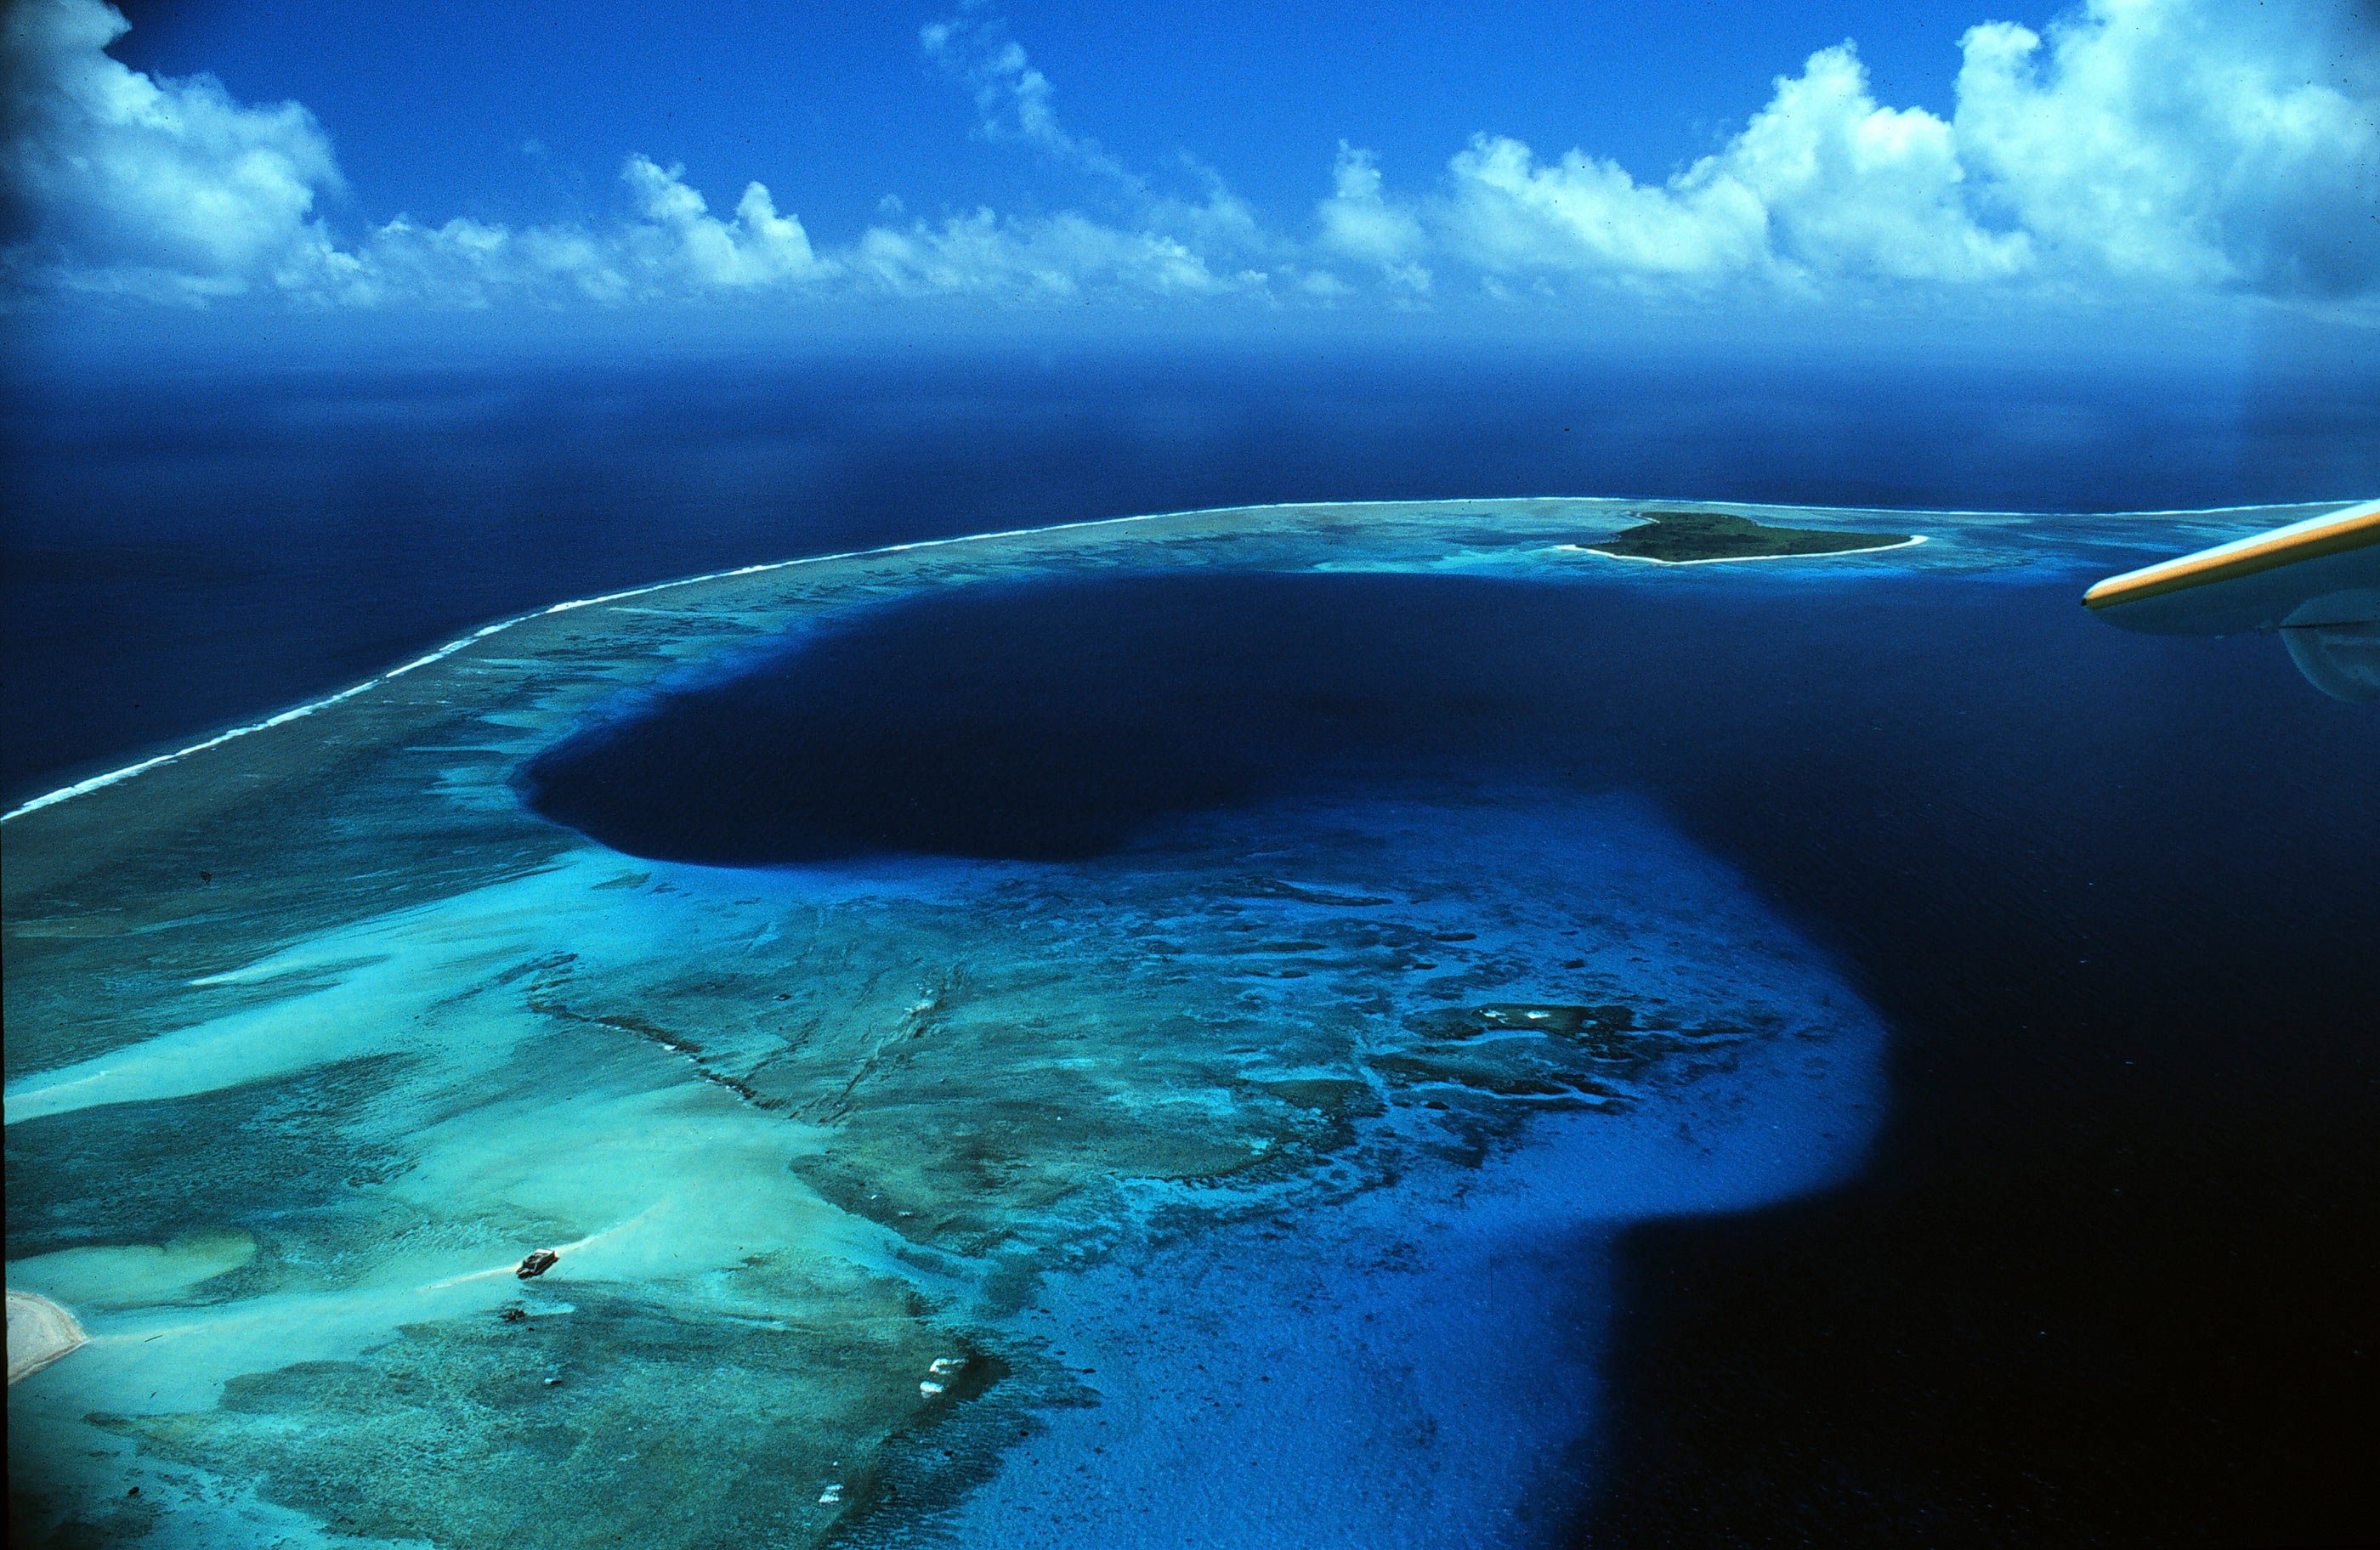 Название островов расположенных в тихом океане. Атолл бикини (Bikini Atoll), Маршалловы острова. Маршалловы острова АТО. Атолле бикини в тихом океане. Атолл на Маршалловых островах.